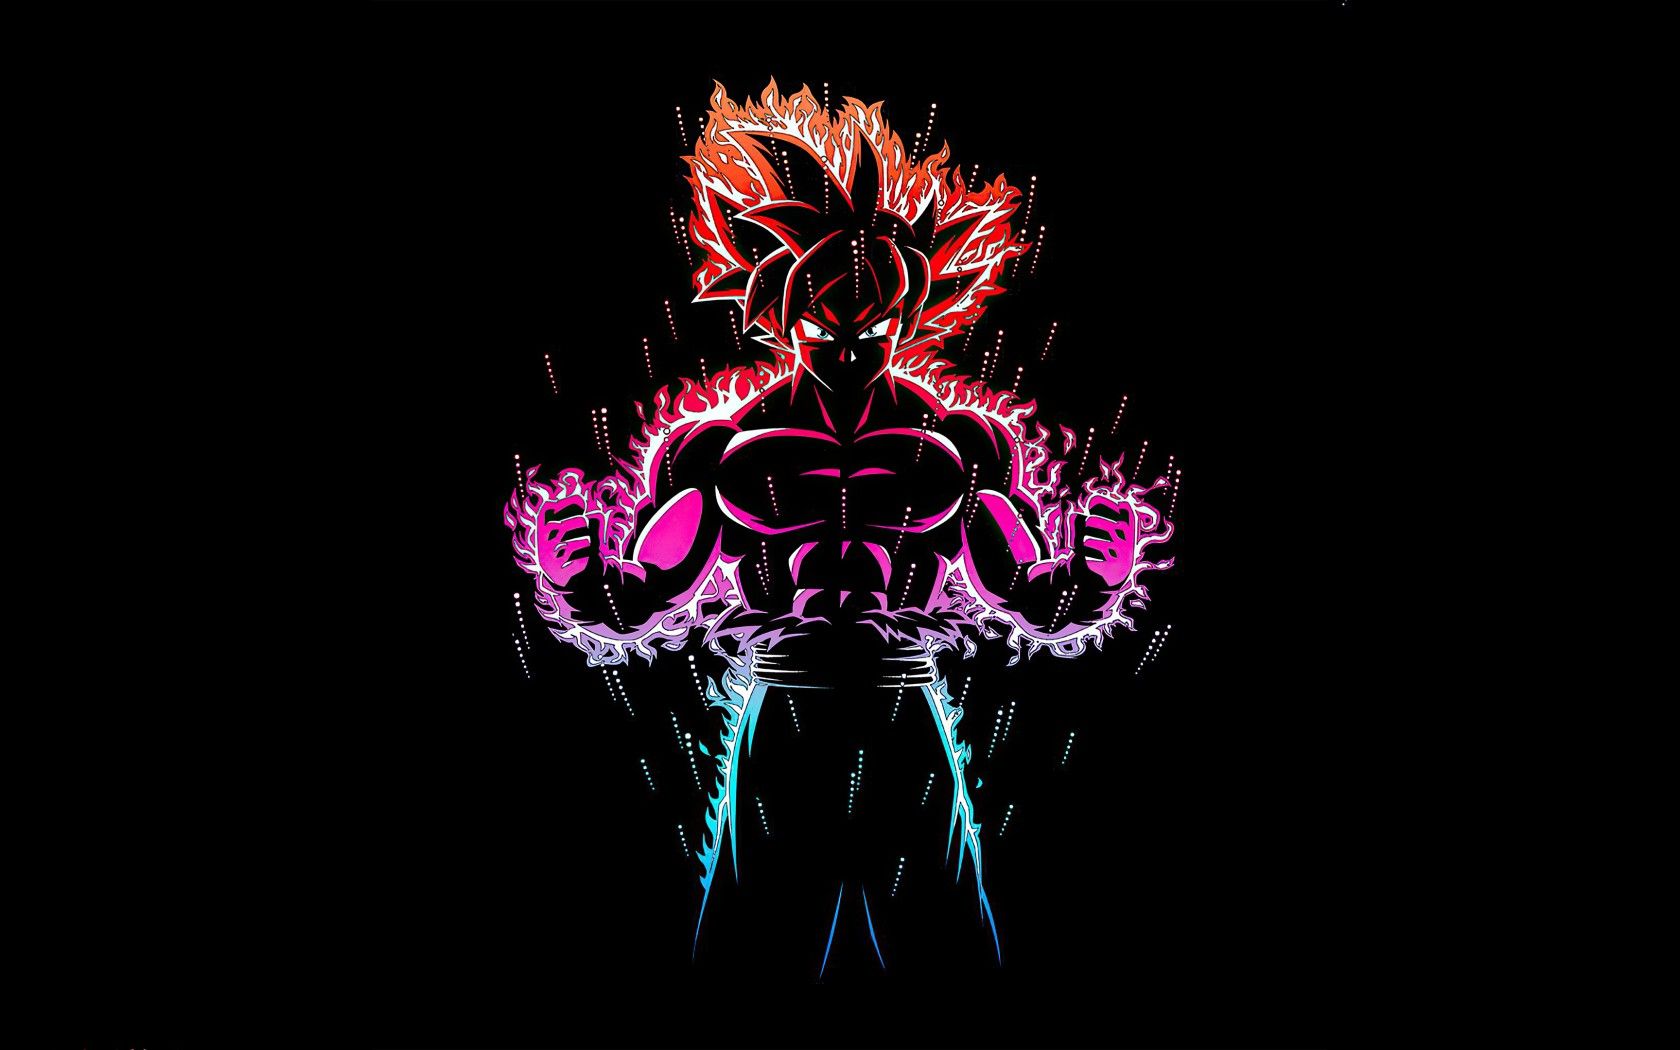 Ultra Instinct Goku 4K Wallpaper, Black background, Dragon Ball Z, AMOLED, Graphics CGI